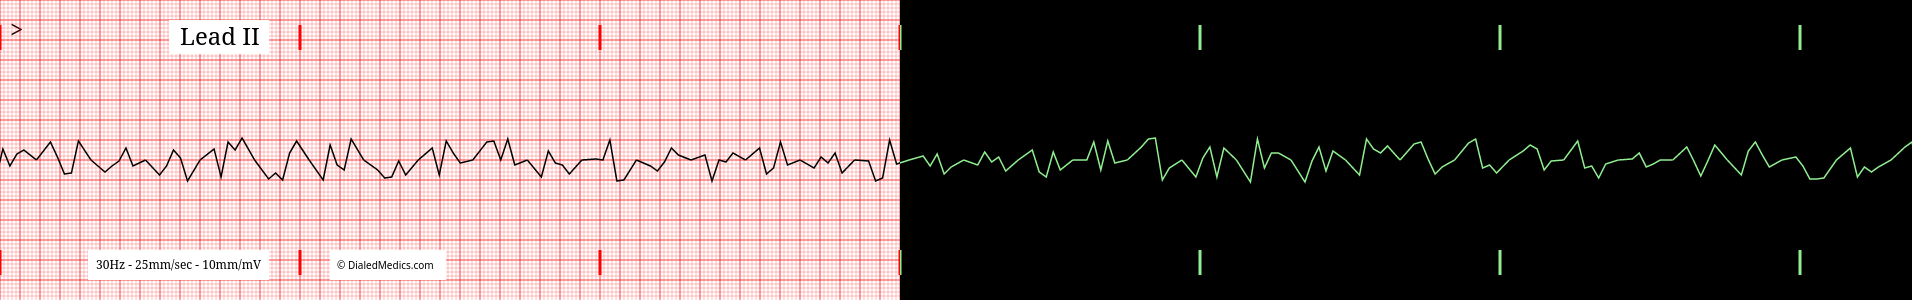 Practice VF EKG tracing.